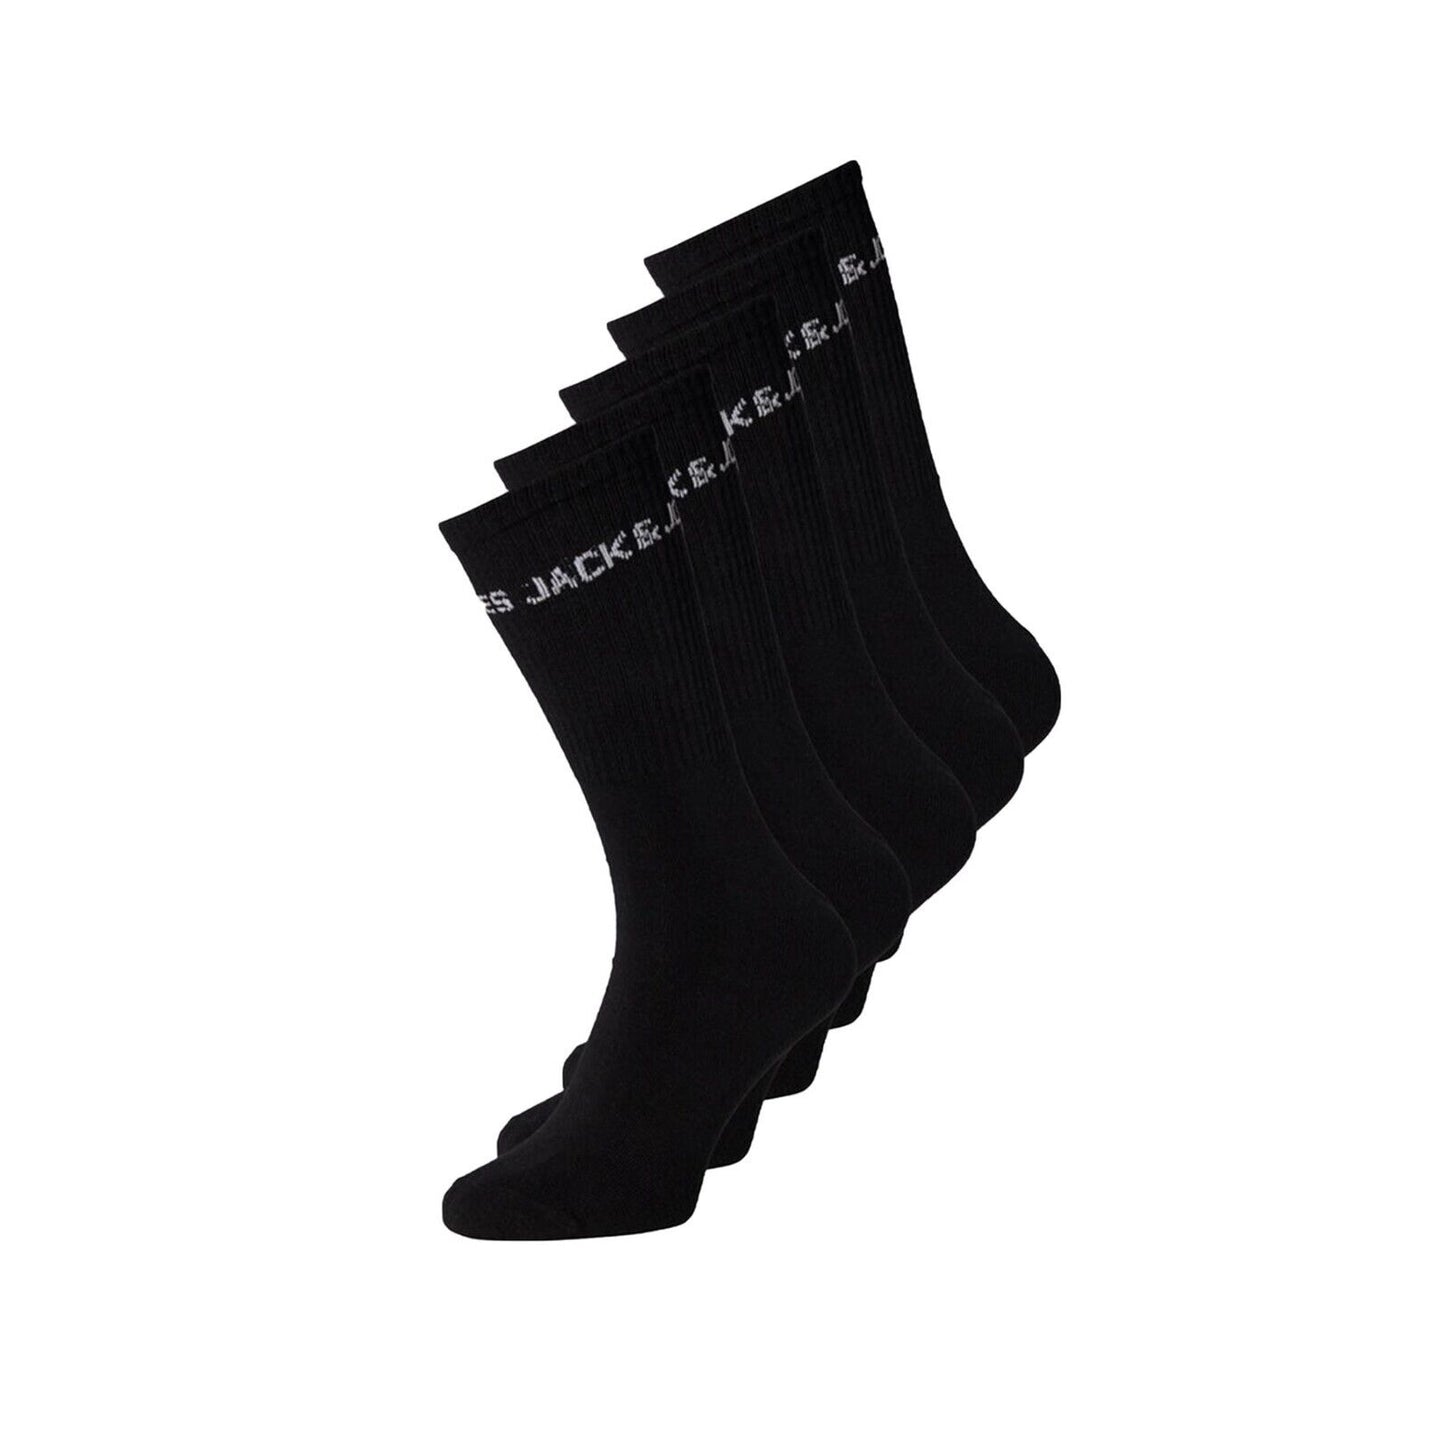 5 Pack Kids Jack Jones Socks Multipack Mid Cut Boys Breathable Casual Sport Sock